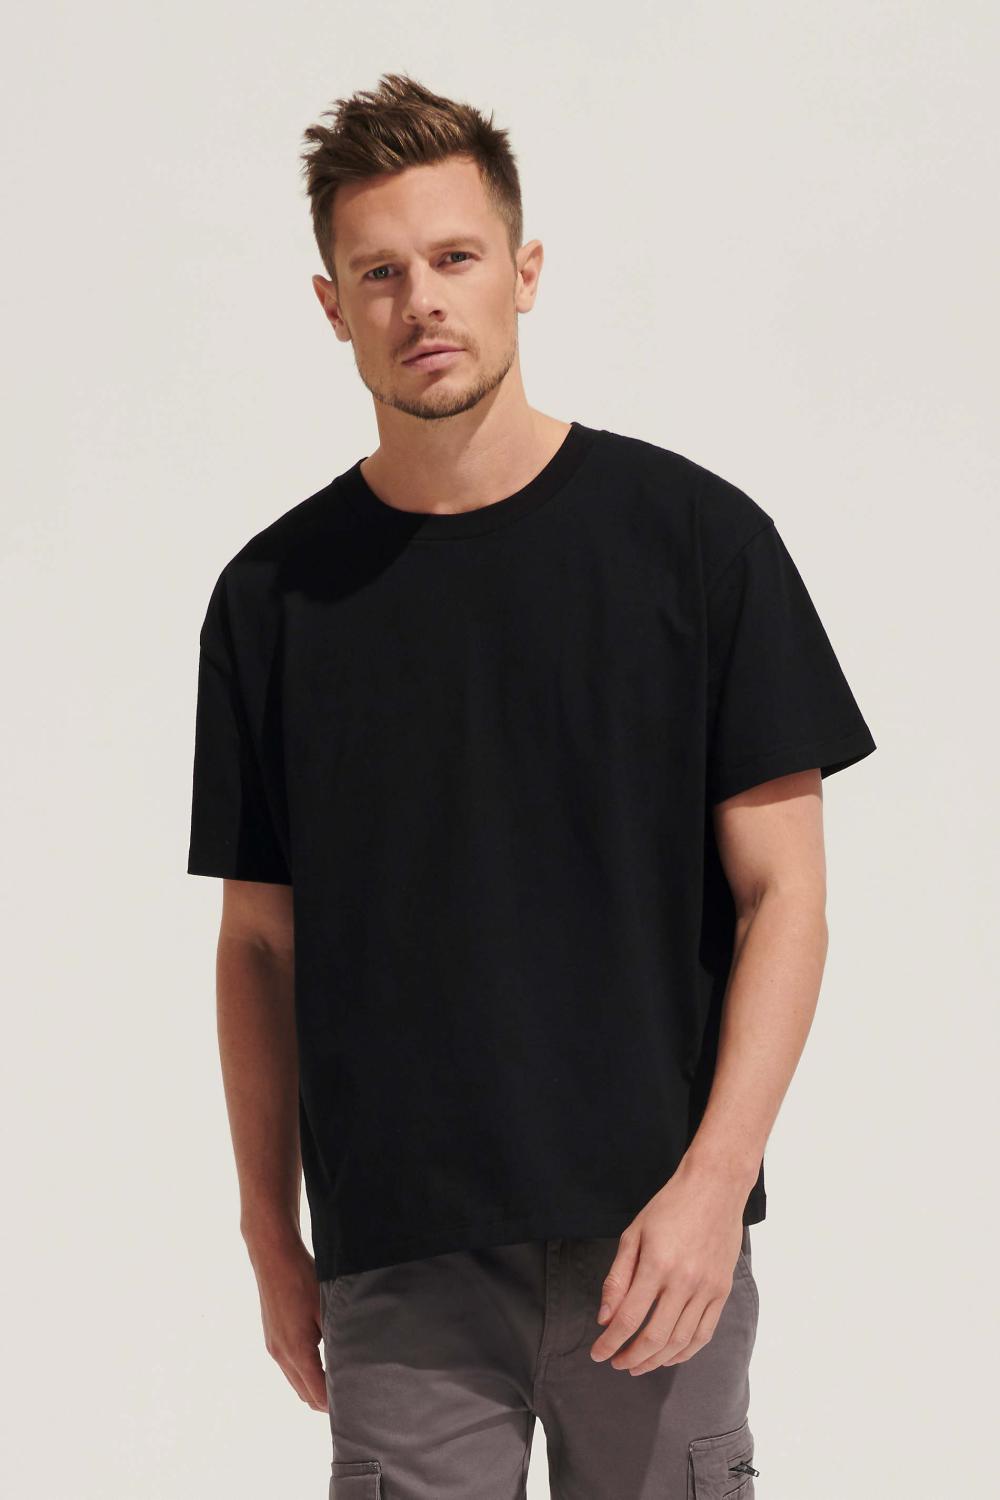 JHK Unisex Oversized T-Shirt (200g) - Maudlin Merchandise